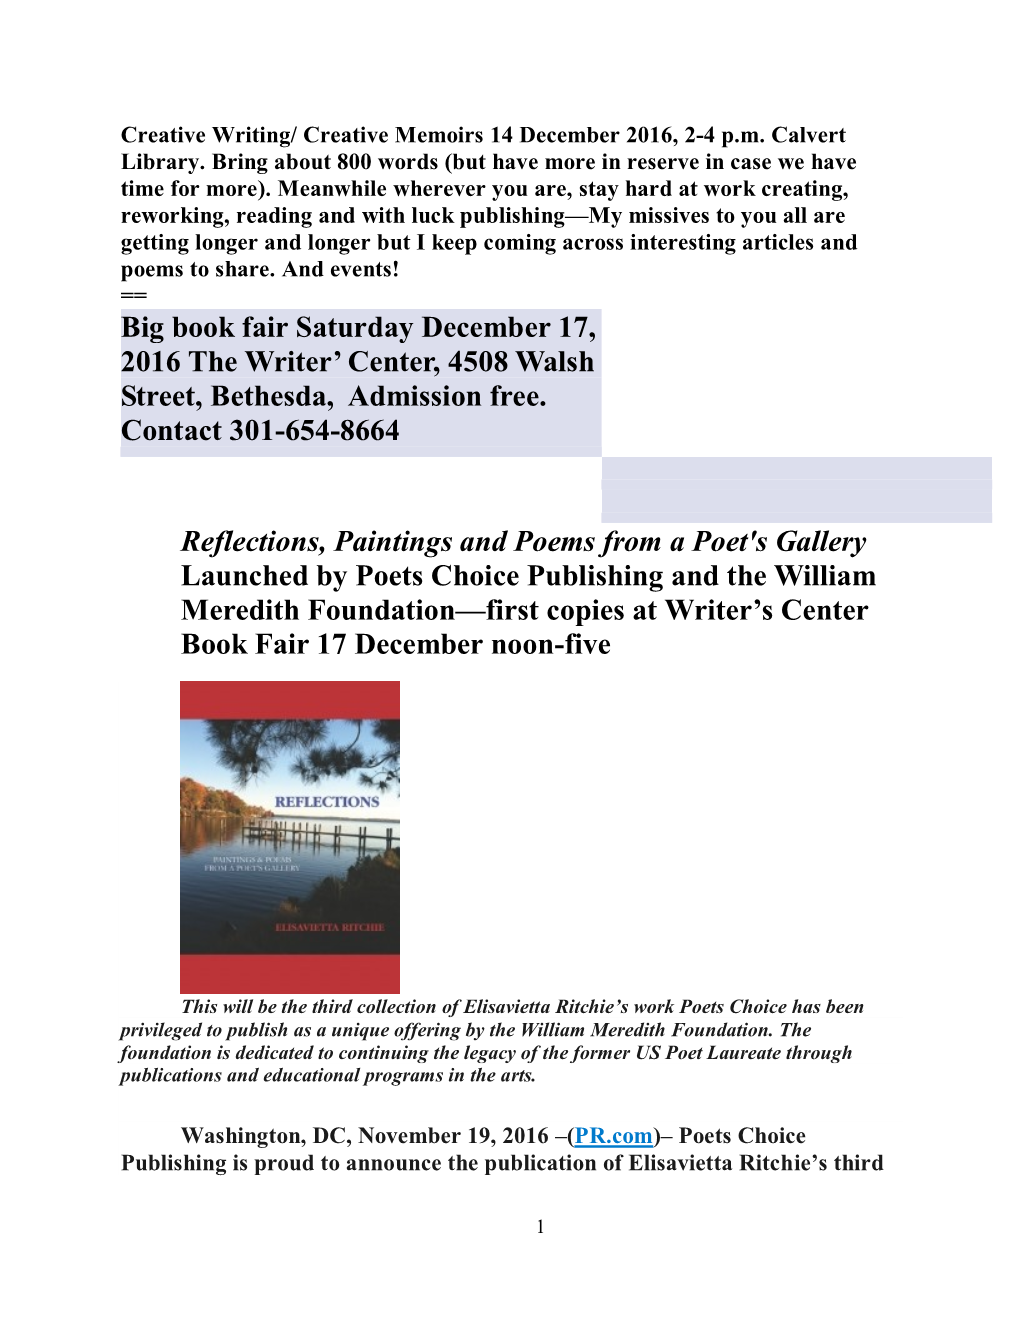 Big Book Fair Saturday December 17, 2016 the Writer' Center, 4508